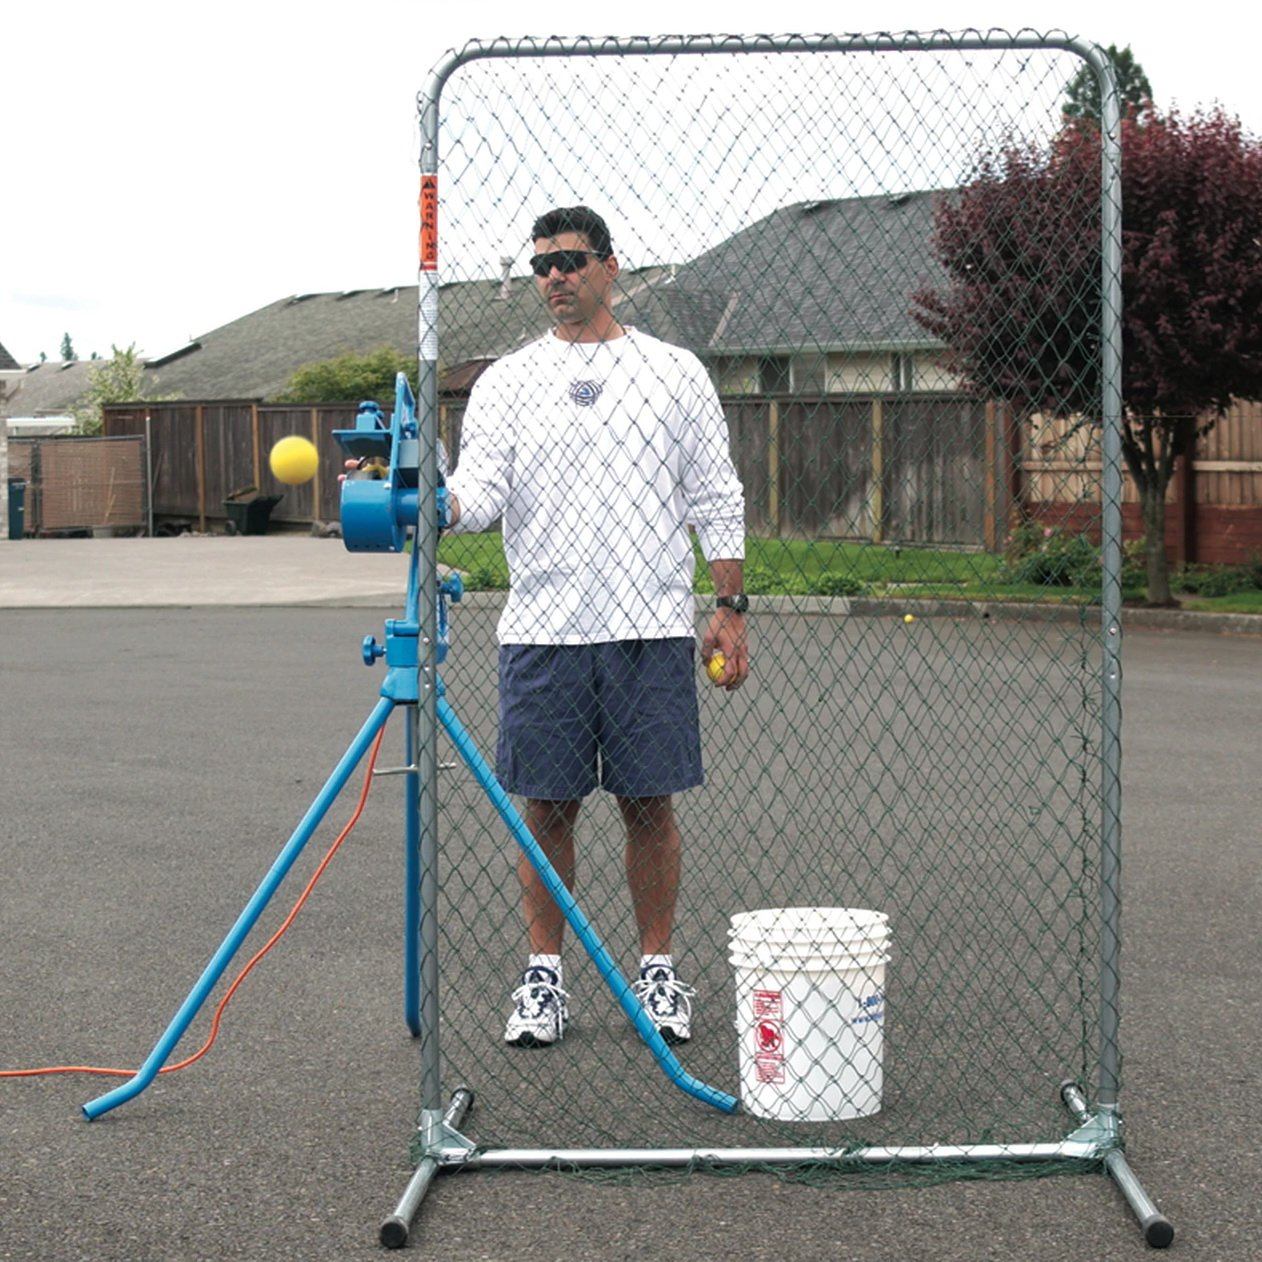 Jugs Lite-Flite® Pitching Machine for Baseball and Softball